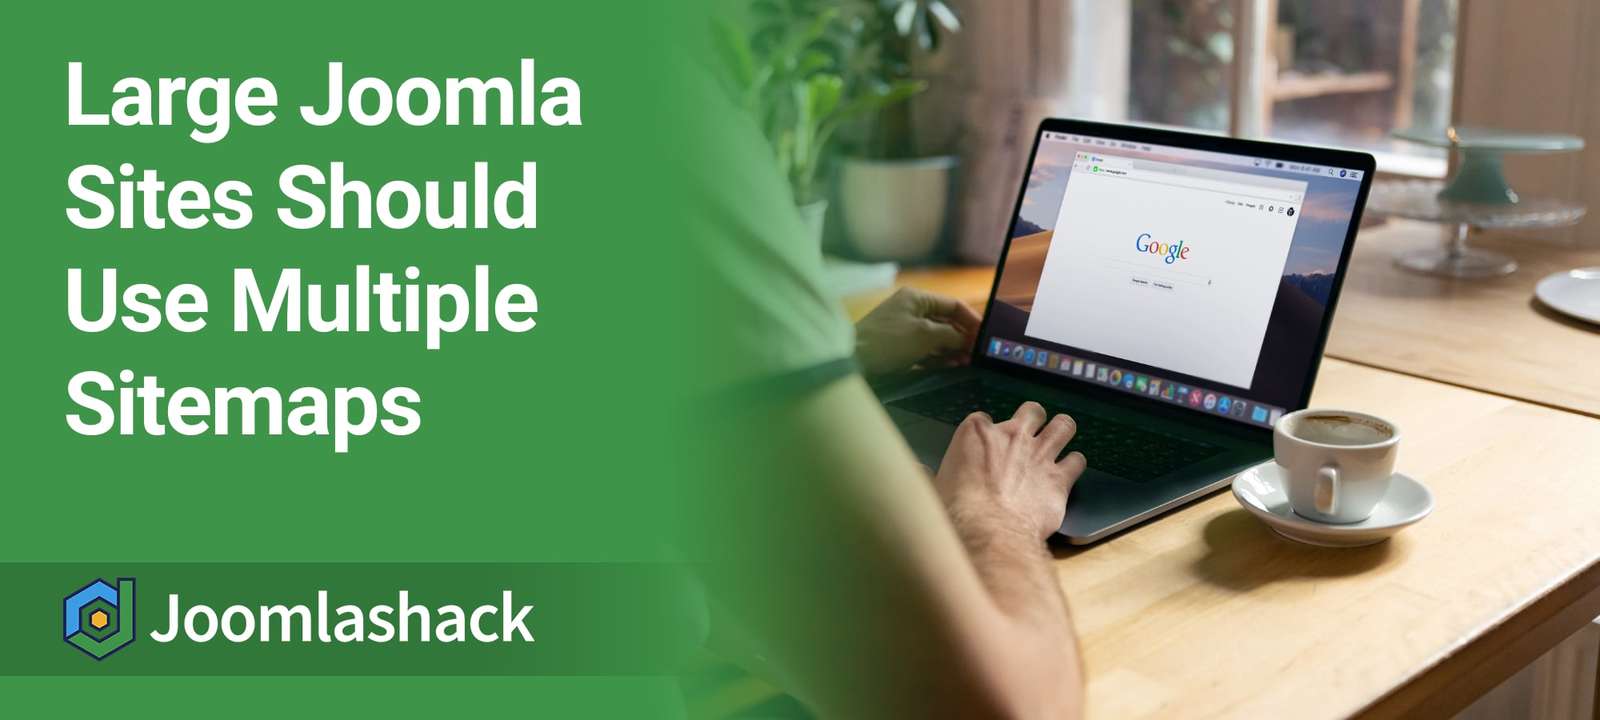 Large Joomla Sites Should Use Multiple Sitemaps